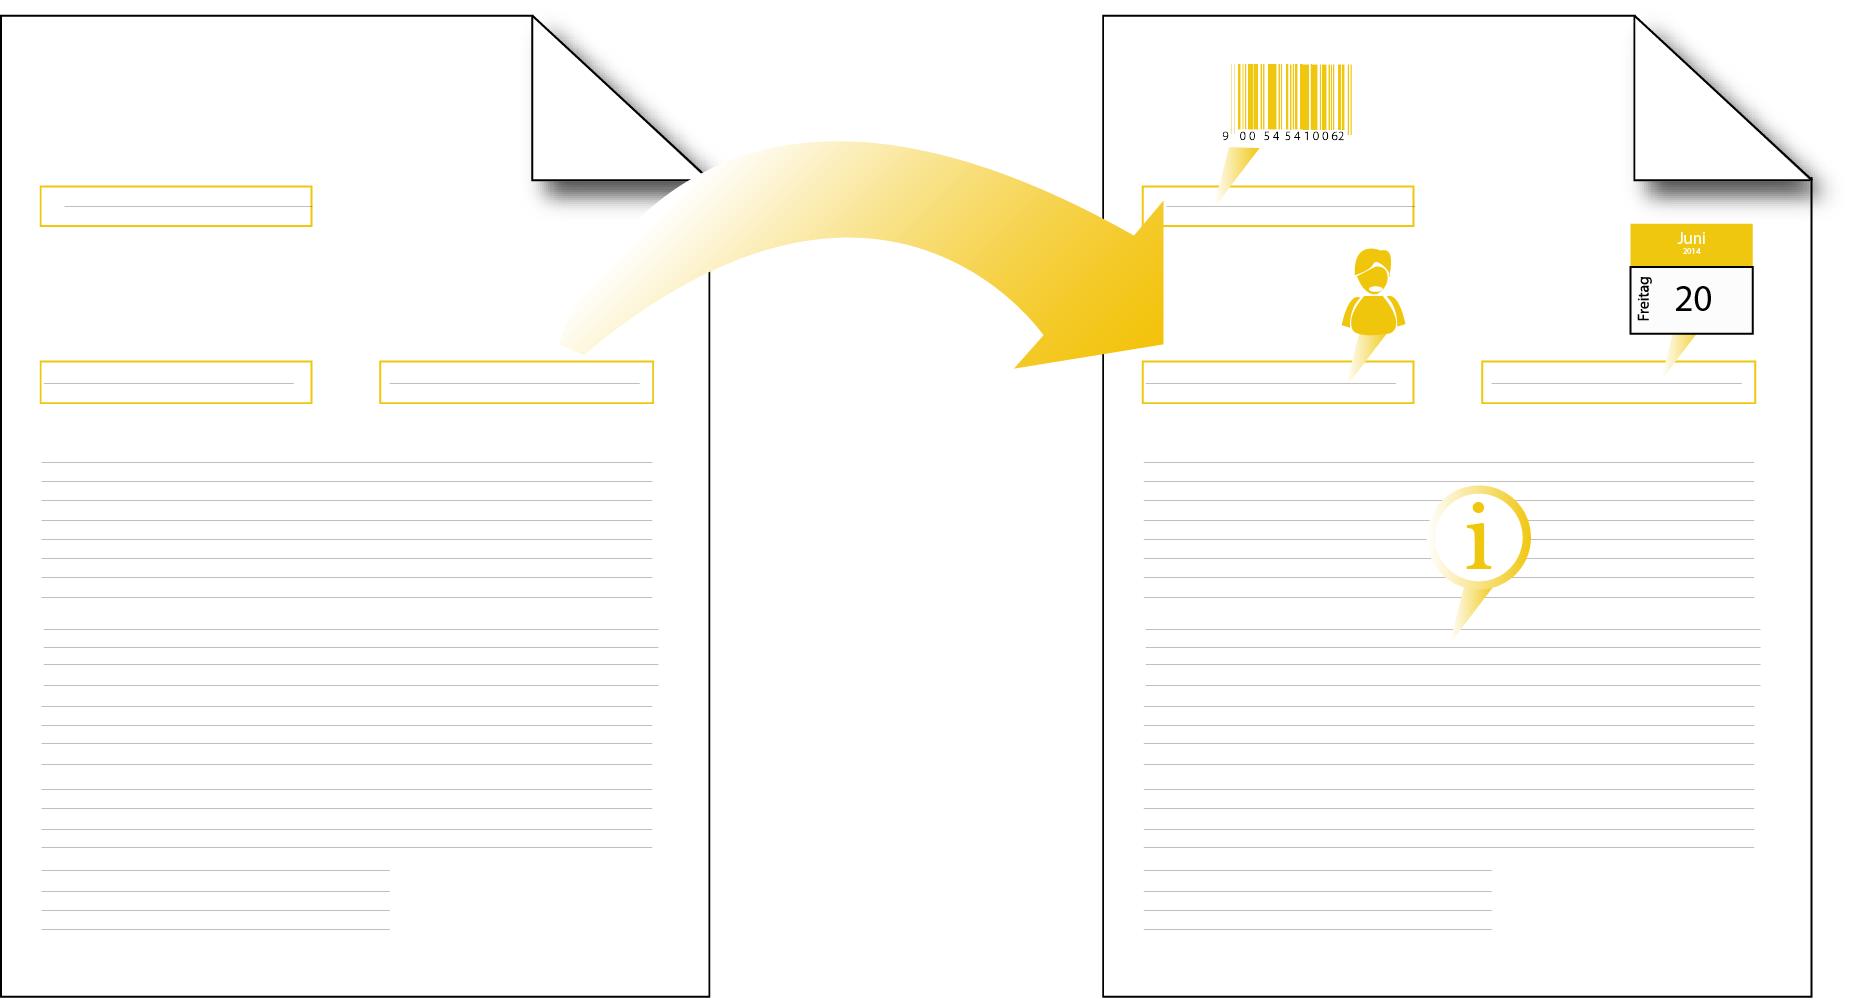 KI bei Datenextraktion aus Dokumenten zur Klassifizierung (Bild: Mindbreeze)